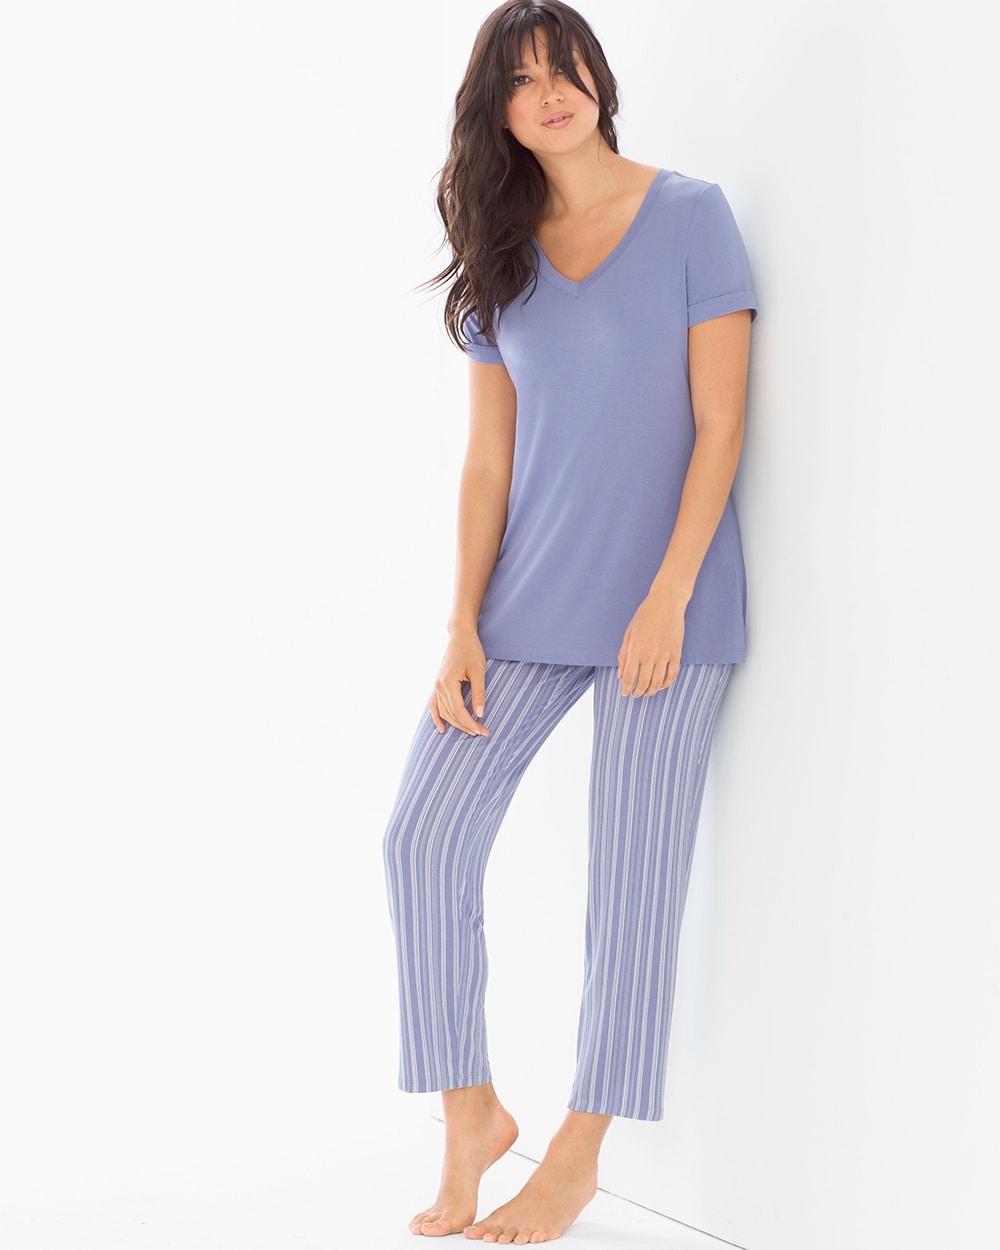 Cool Nights Ankle Pants Pajama Set Finespun Stripe Blue Chill